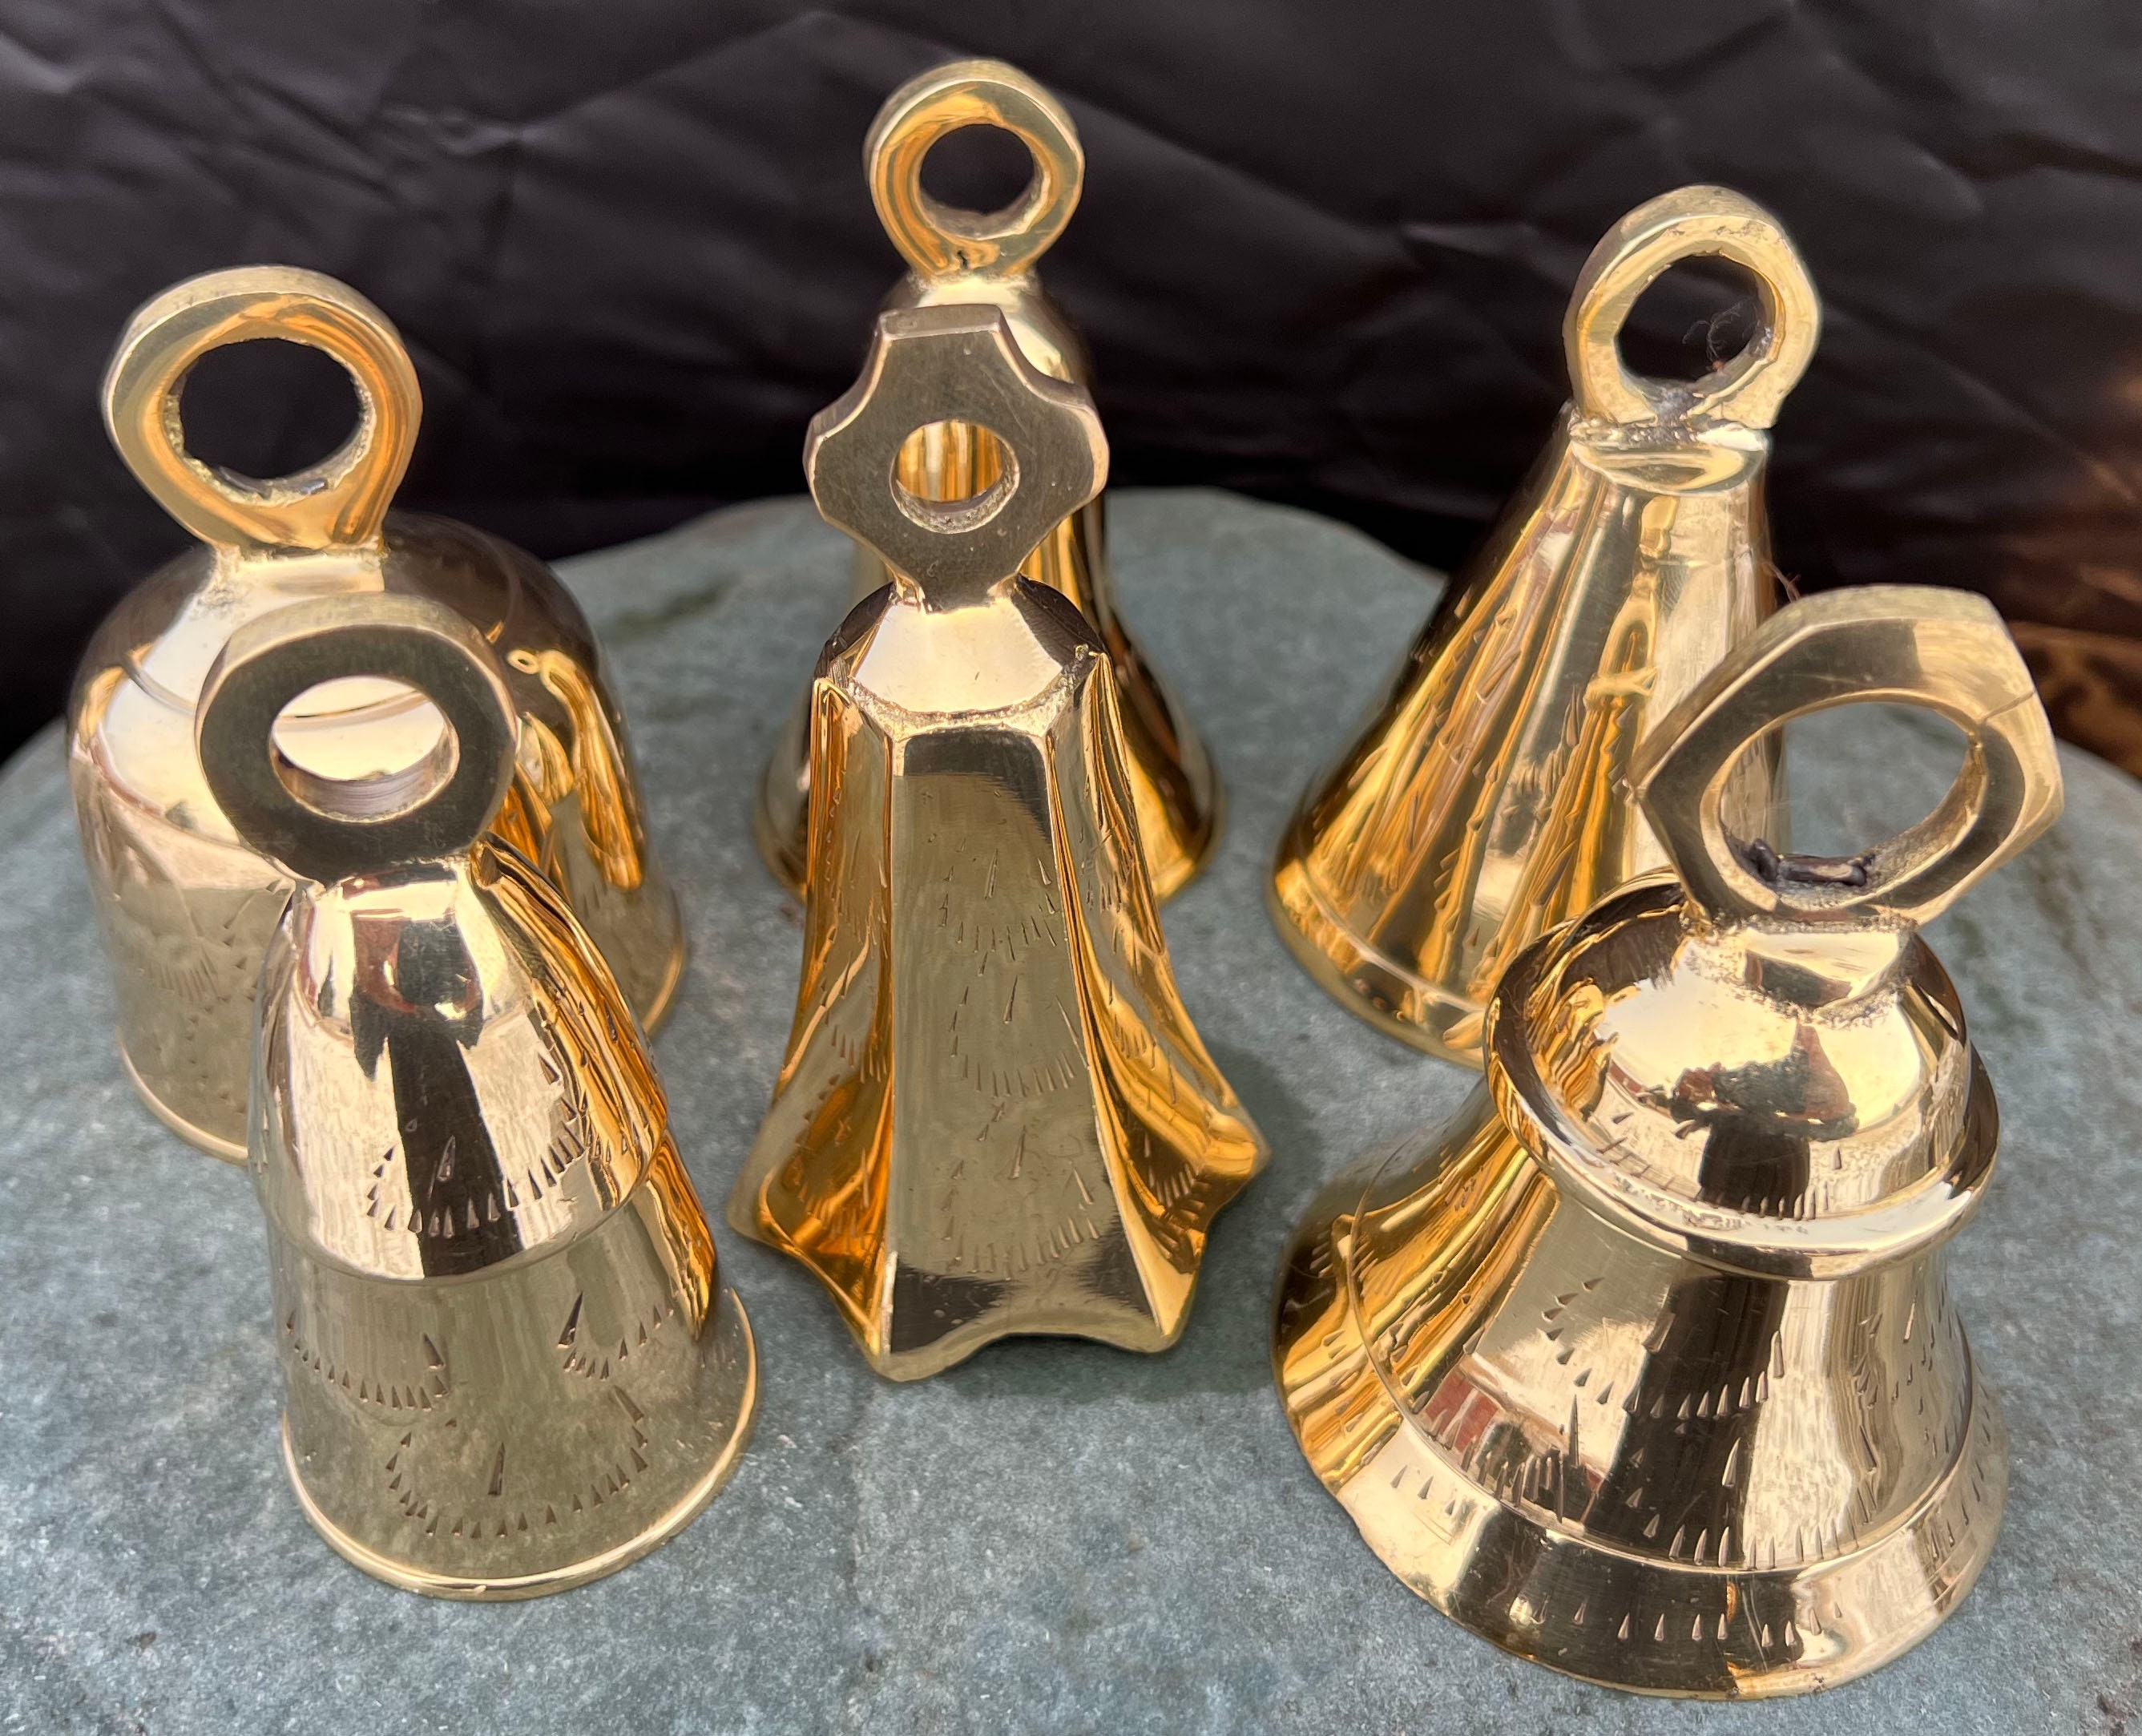 Dozen Golden Brass Miniature Bells Temple Bell Decorations and Crafting,  Assorted Golden Mild Tone Bells set of 12 1.5 Inch 